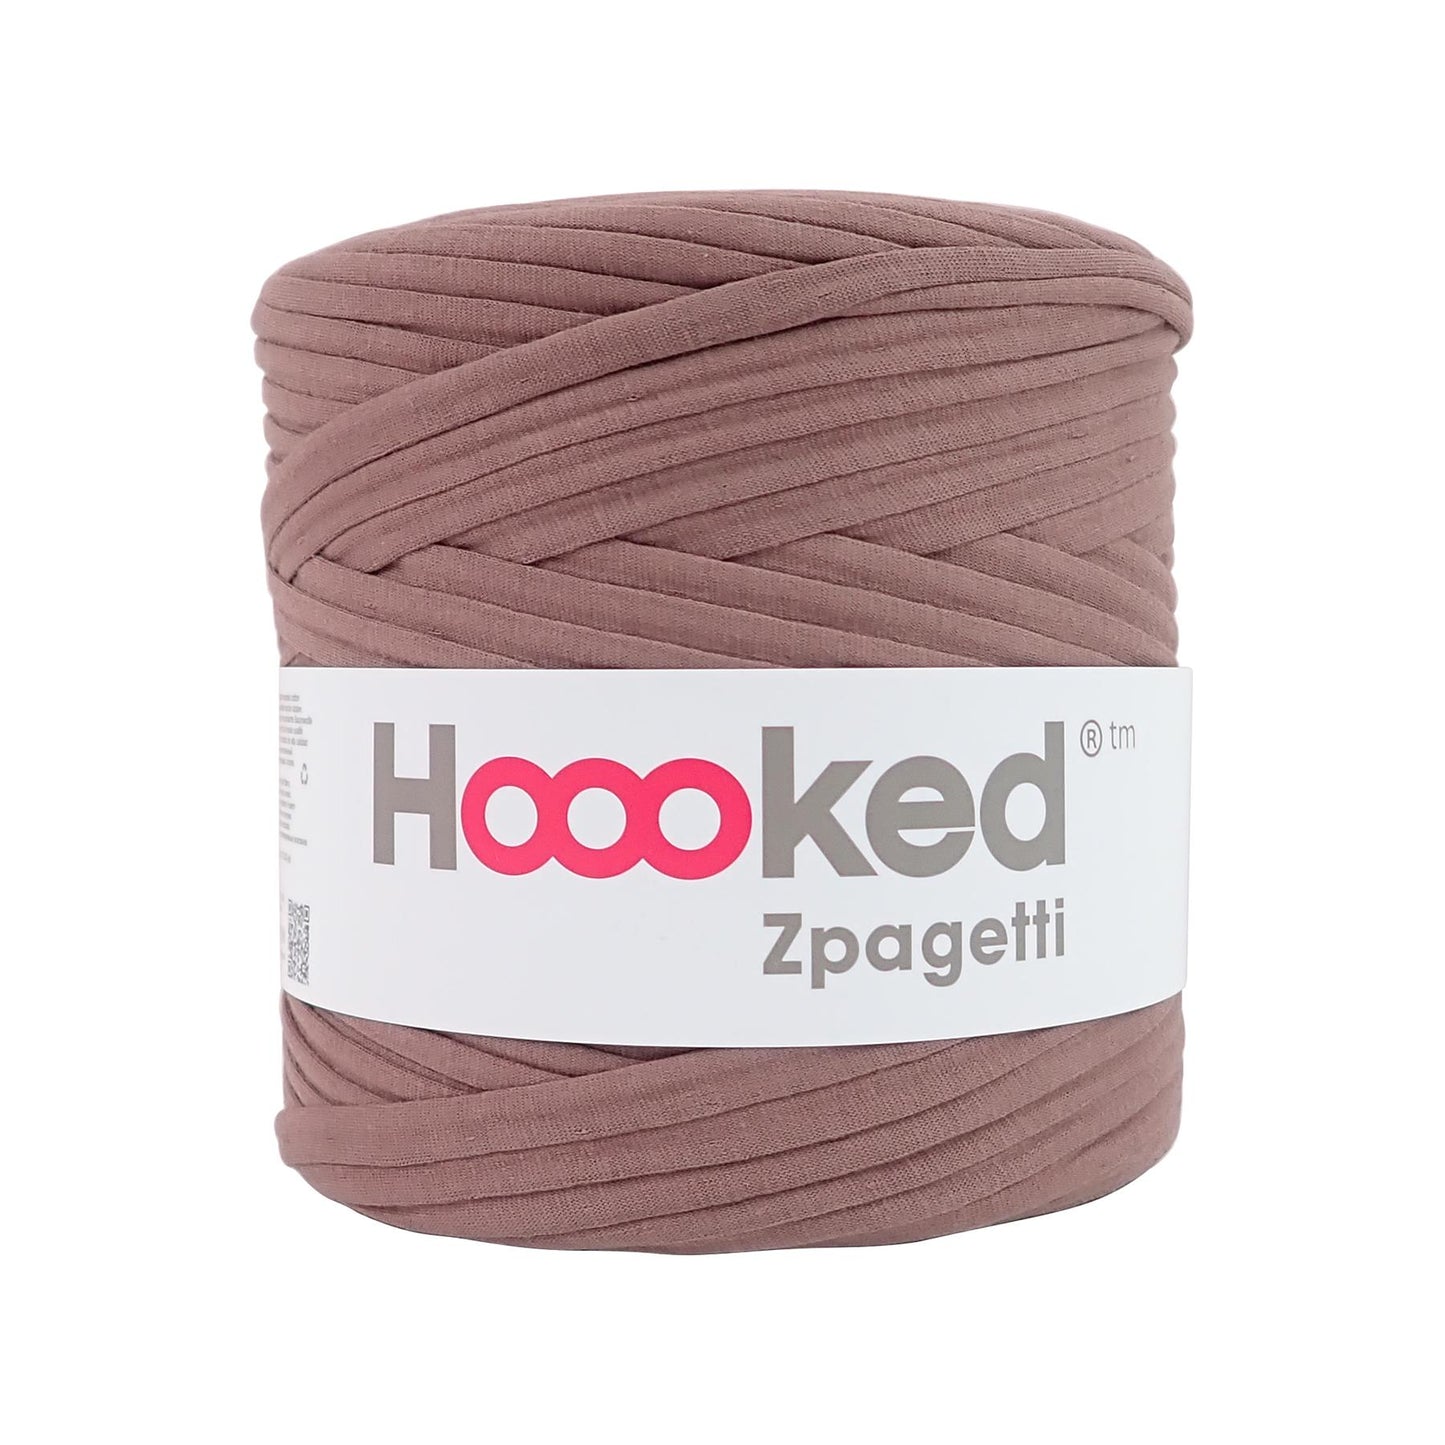 Hoooked Zpagetti Mushroom Cotton T-Shirt Yarn - 120M 700g